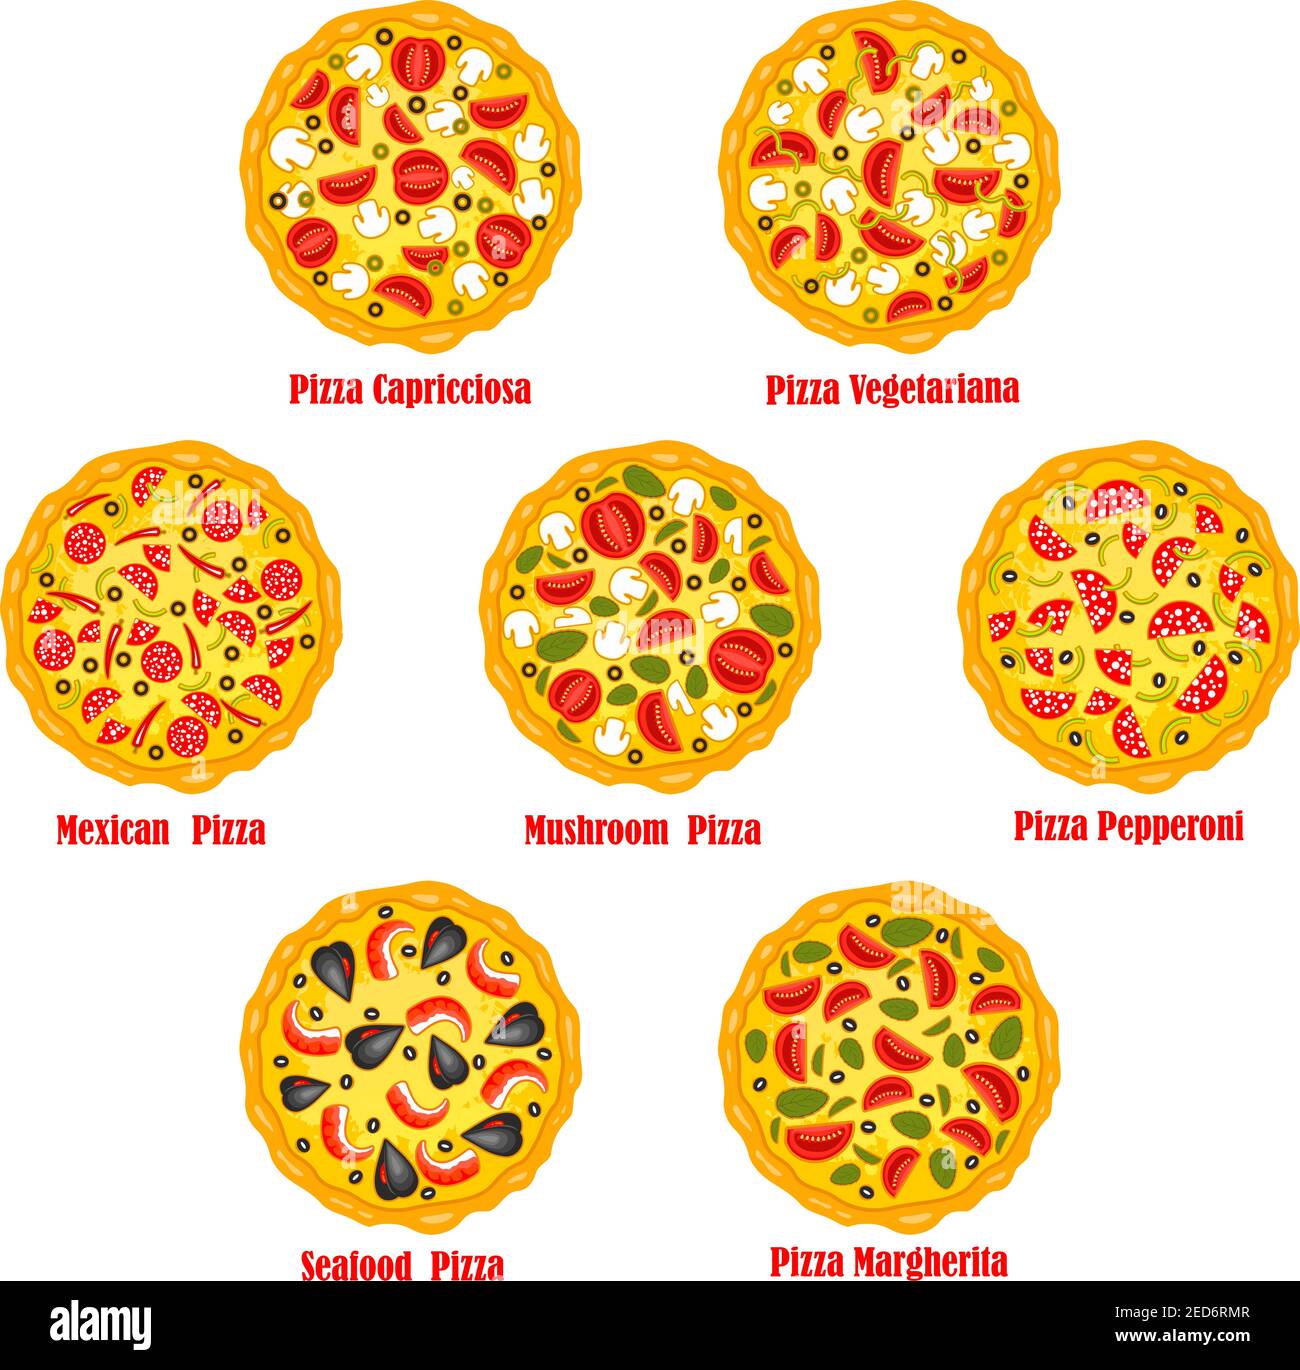 технологические карты на пиццу пепперони фото 65